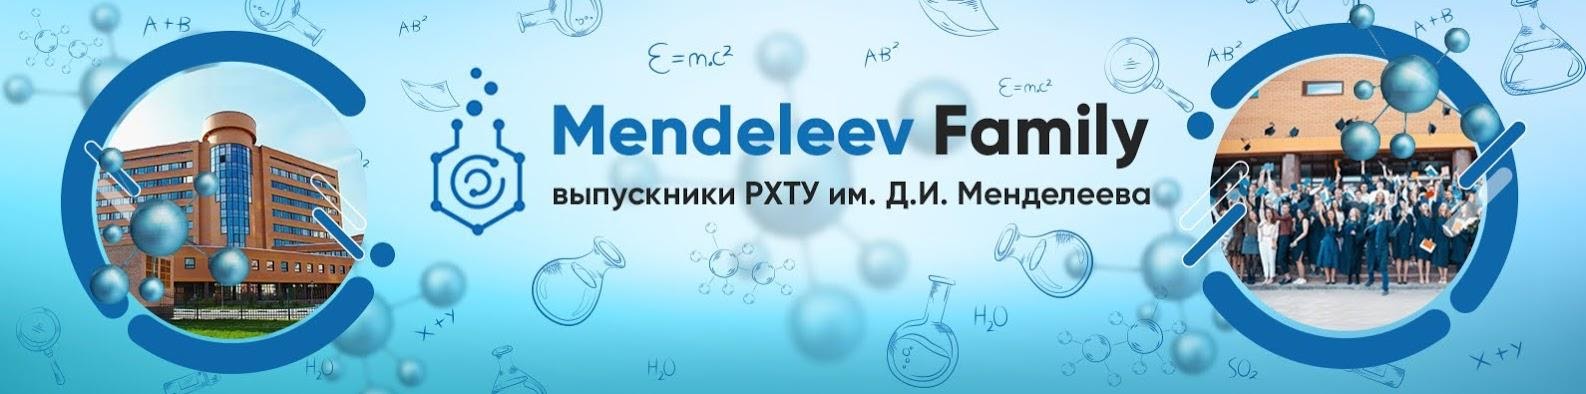 Сообщество выпускников «Mendeleev family»